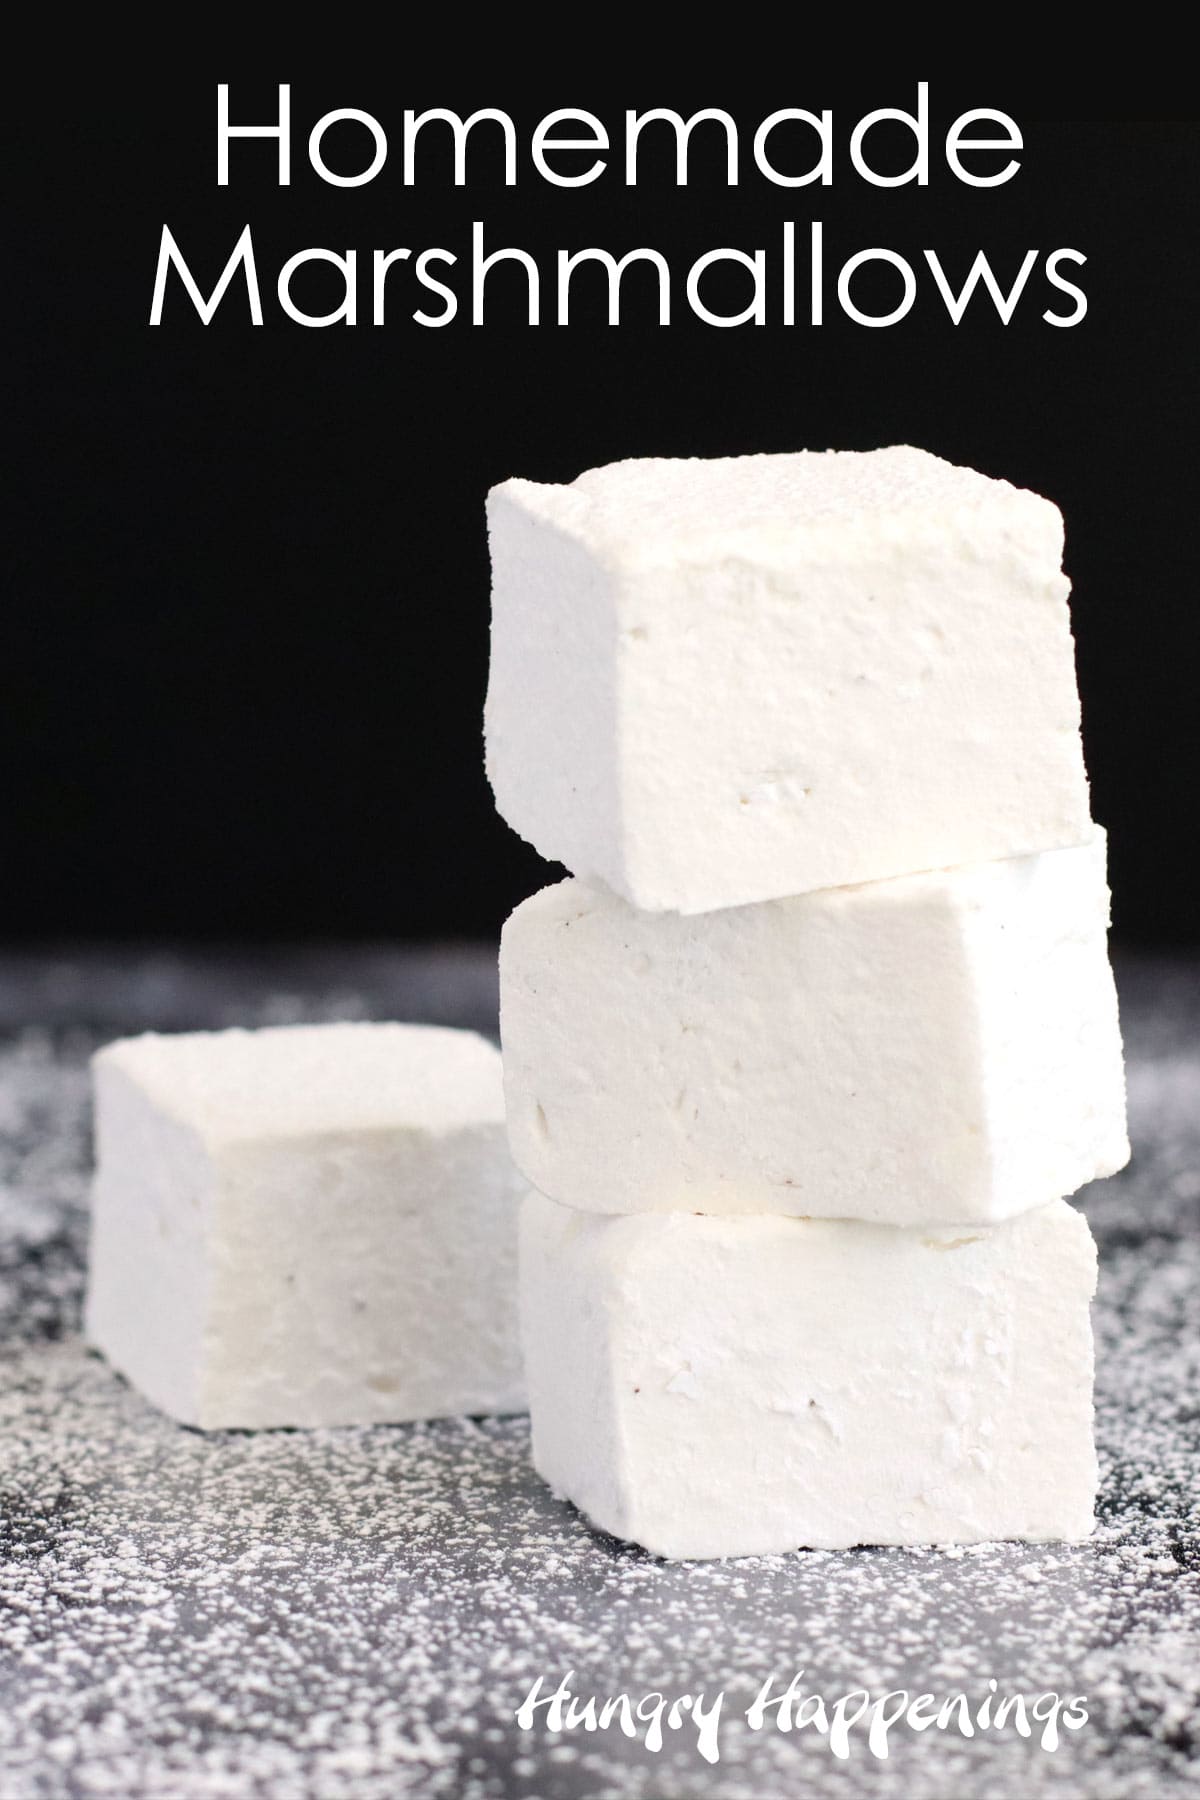 Homemade marshmallows recipe image.